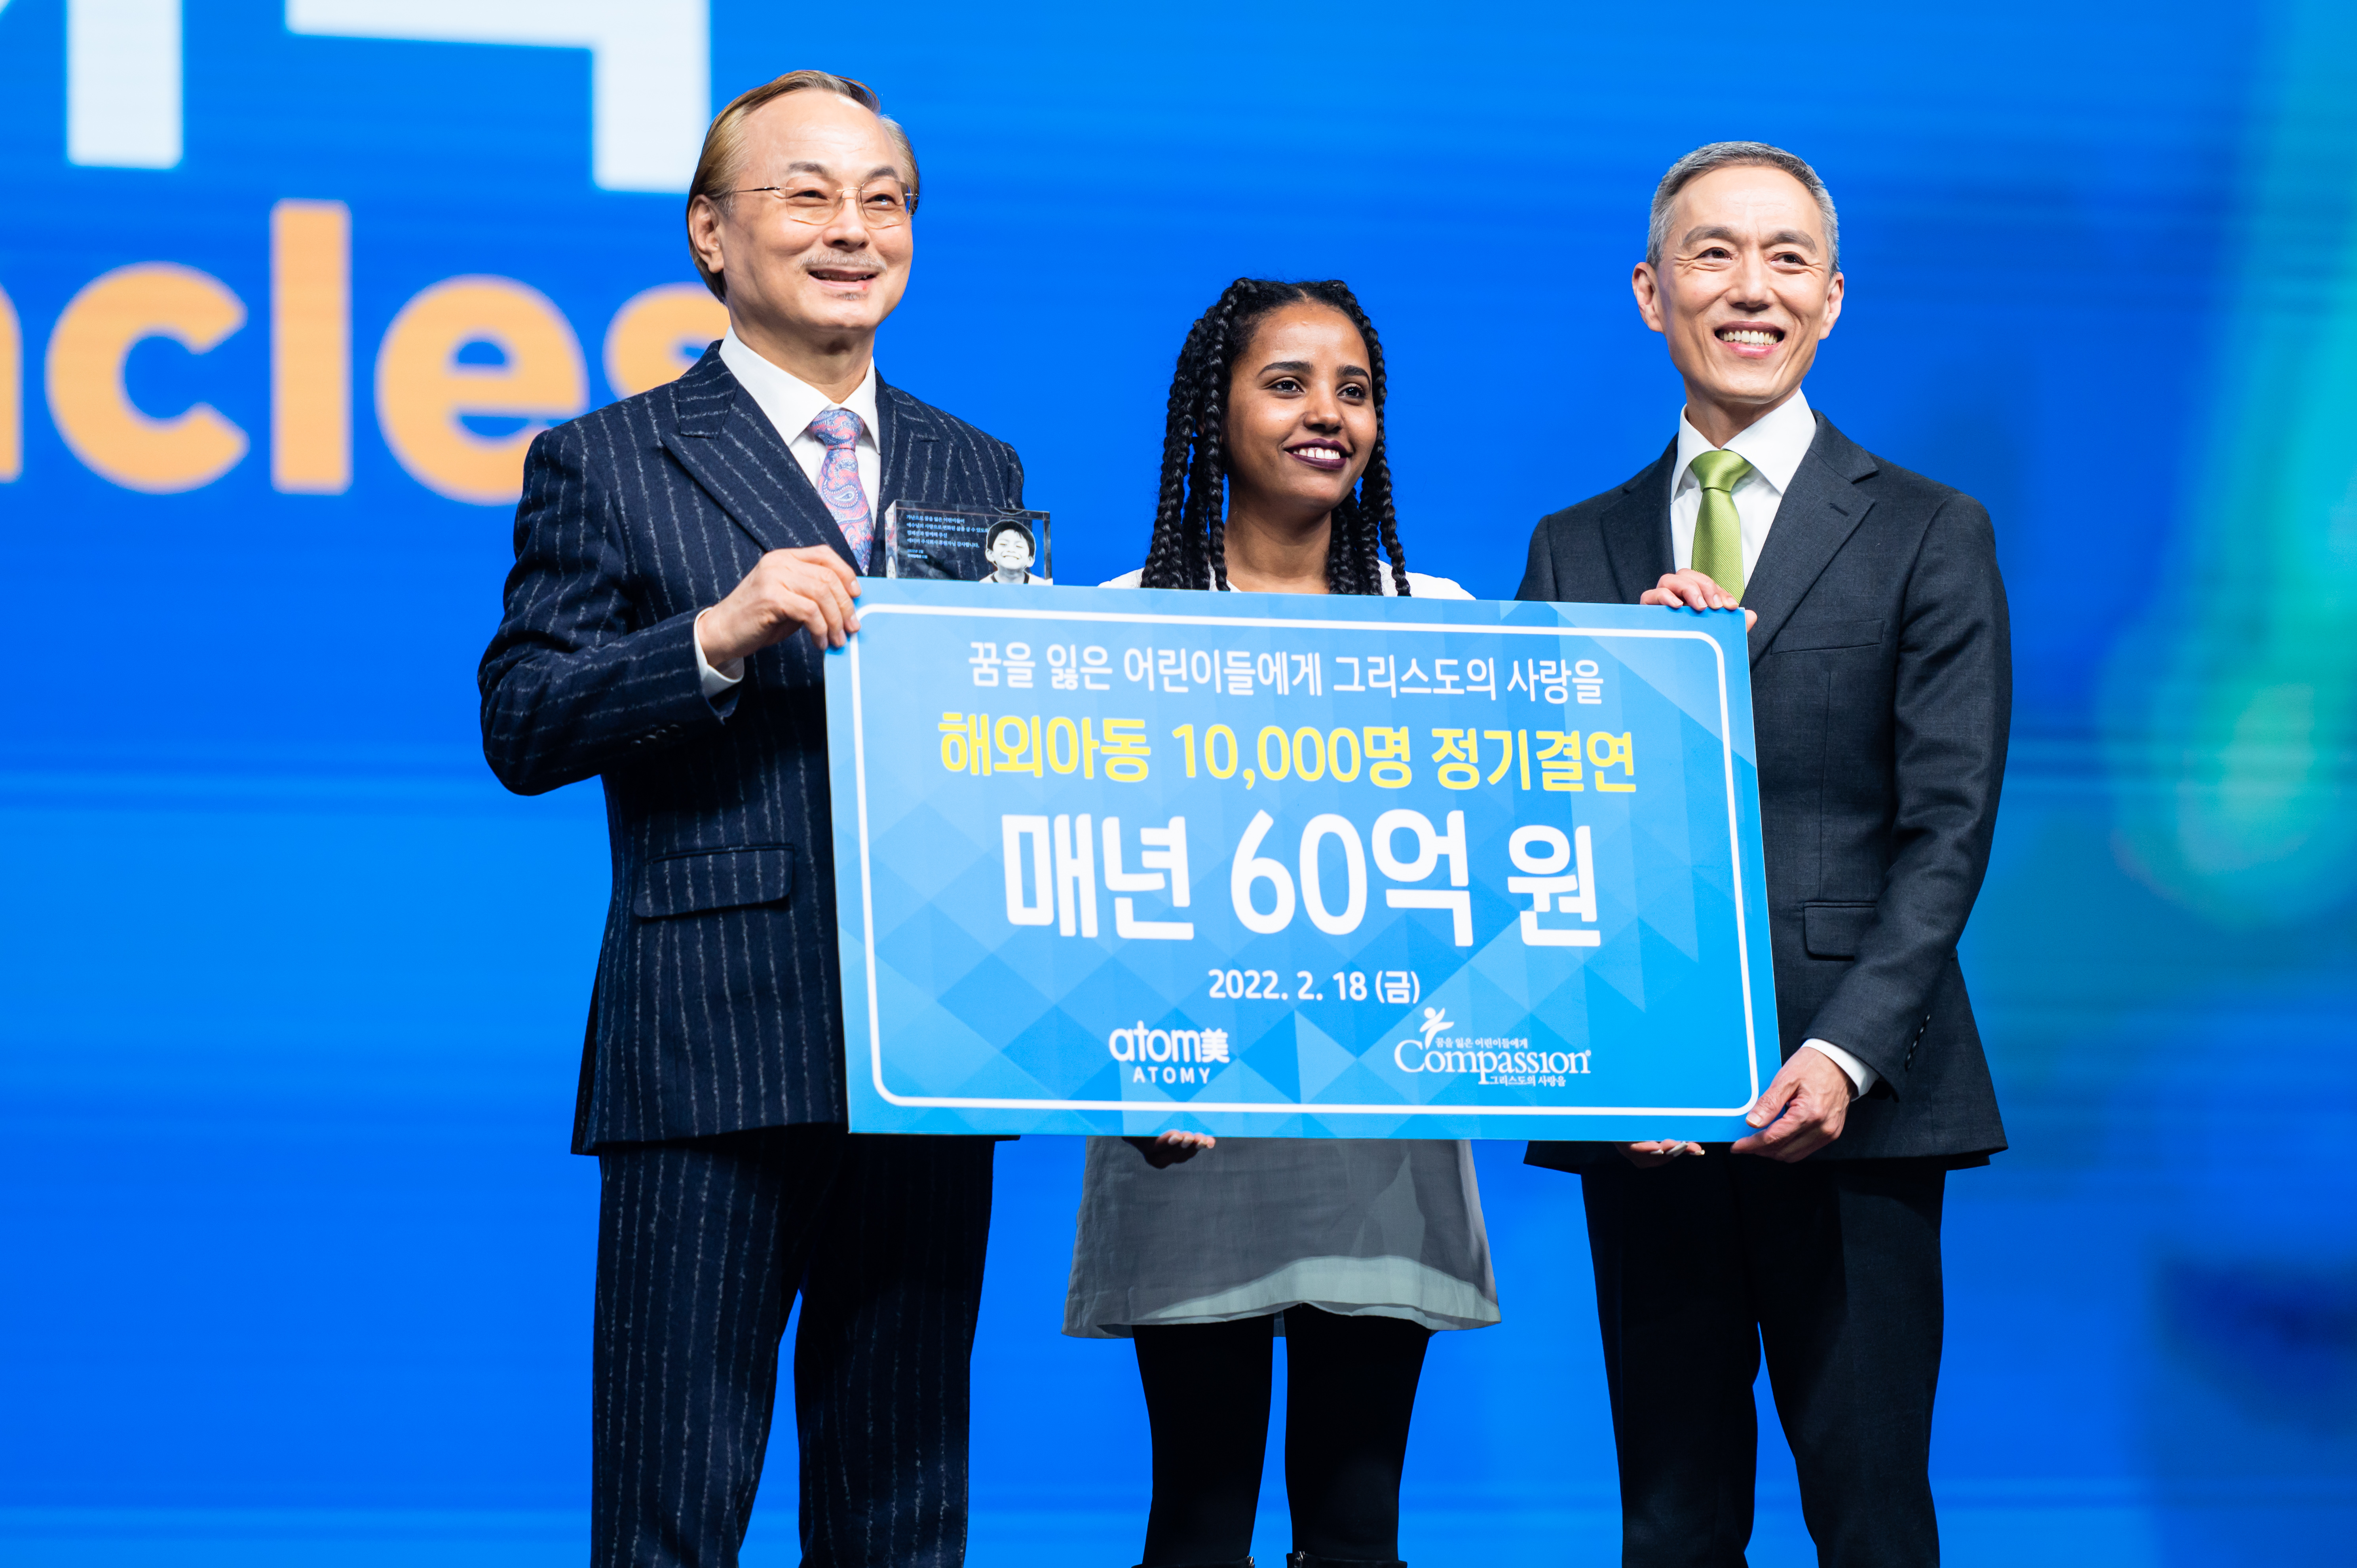 艾多美與韓國 Compassion 簽署捐助全球 10,000 名兒童協議